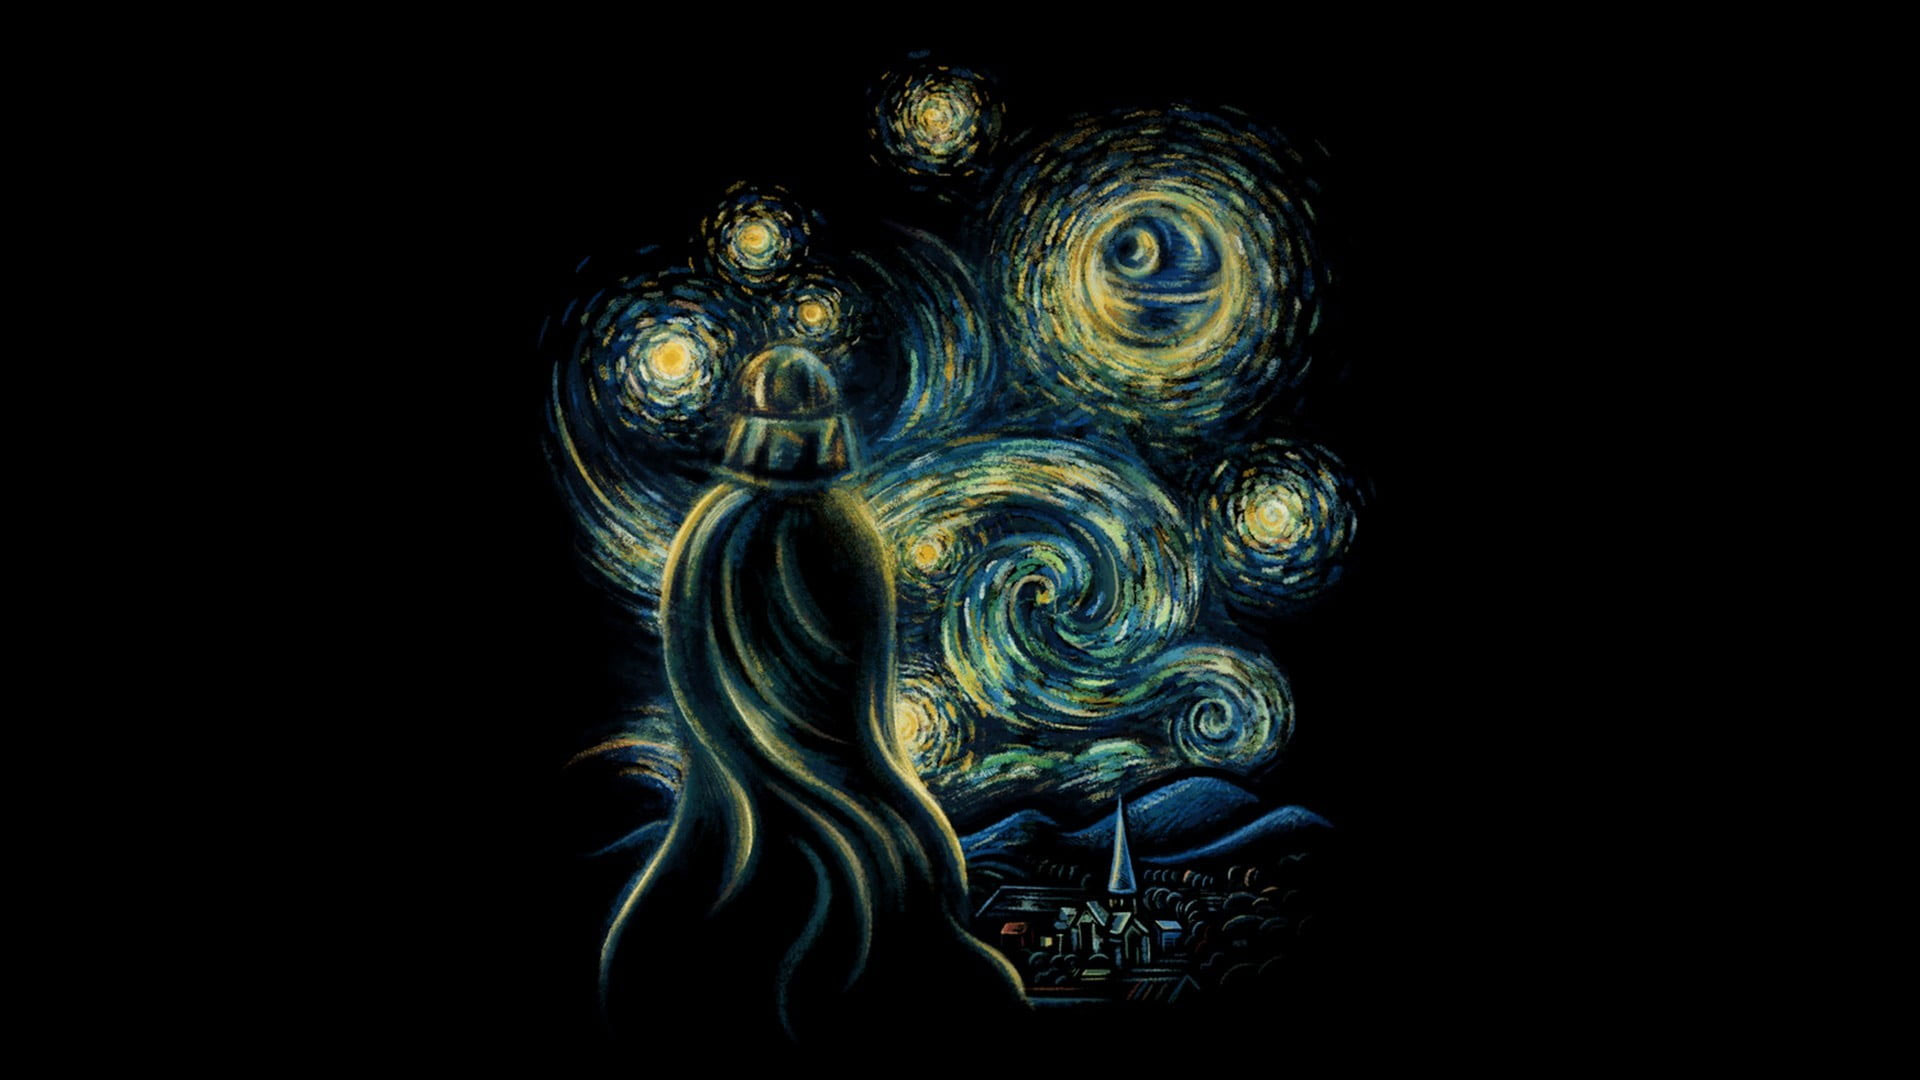 Starry Night painting wallpaper, Star Wars, Vincent van Gogh, crossover